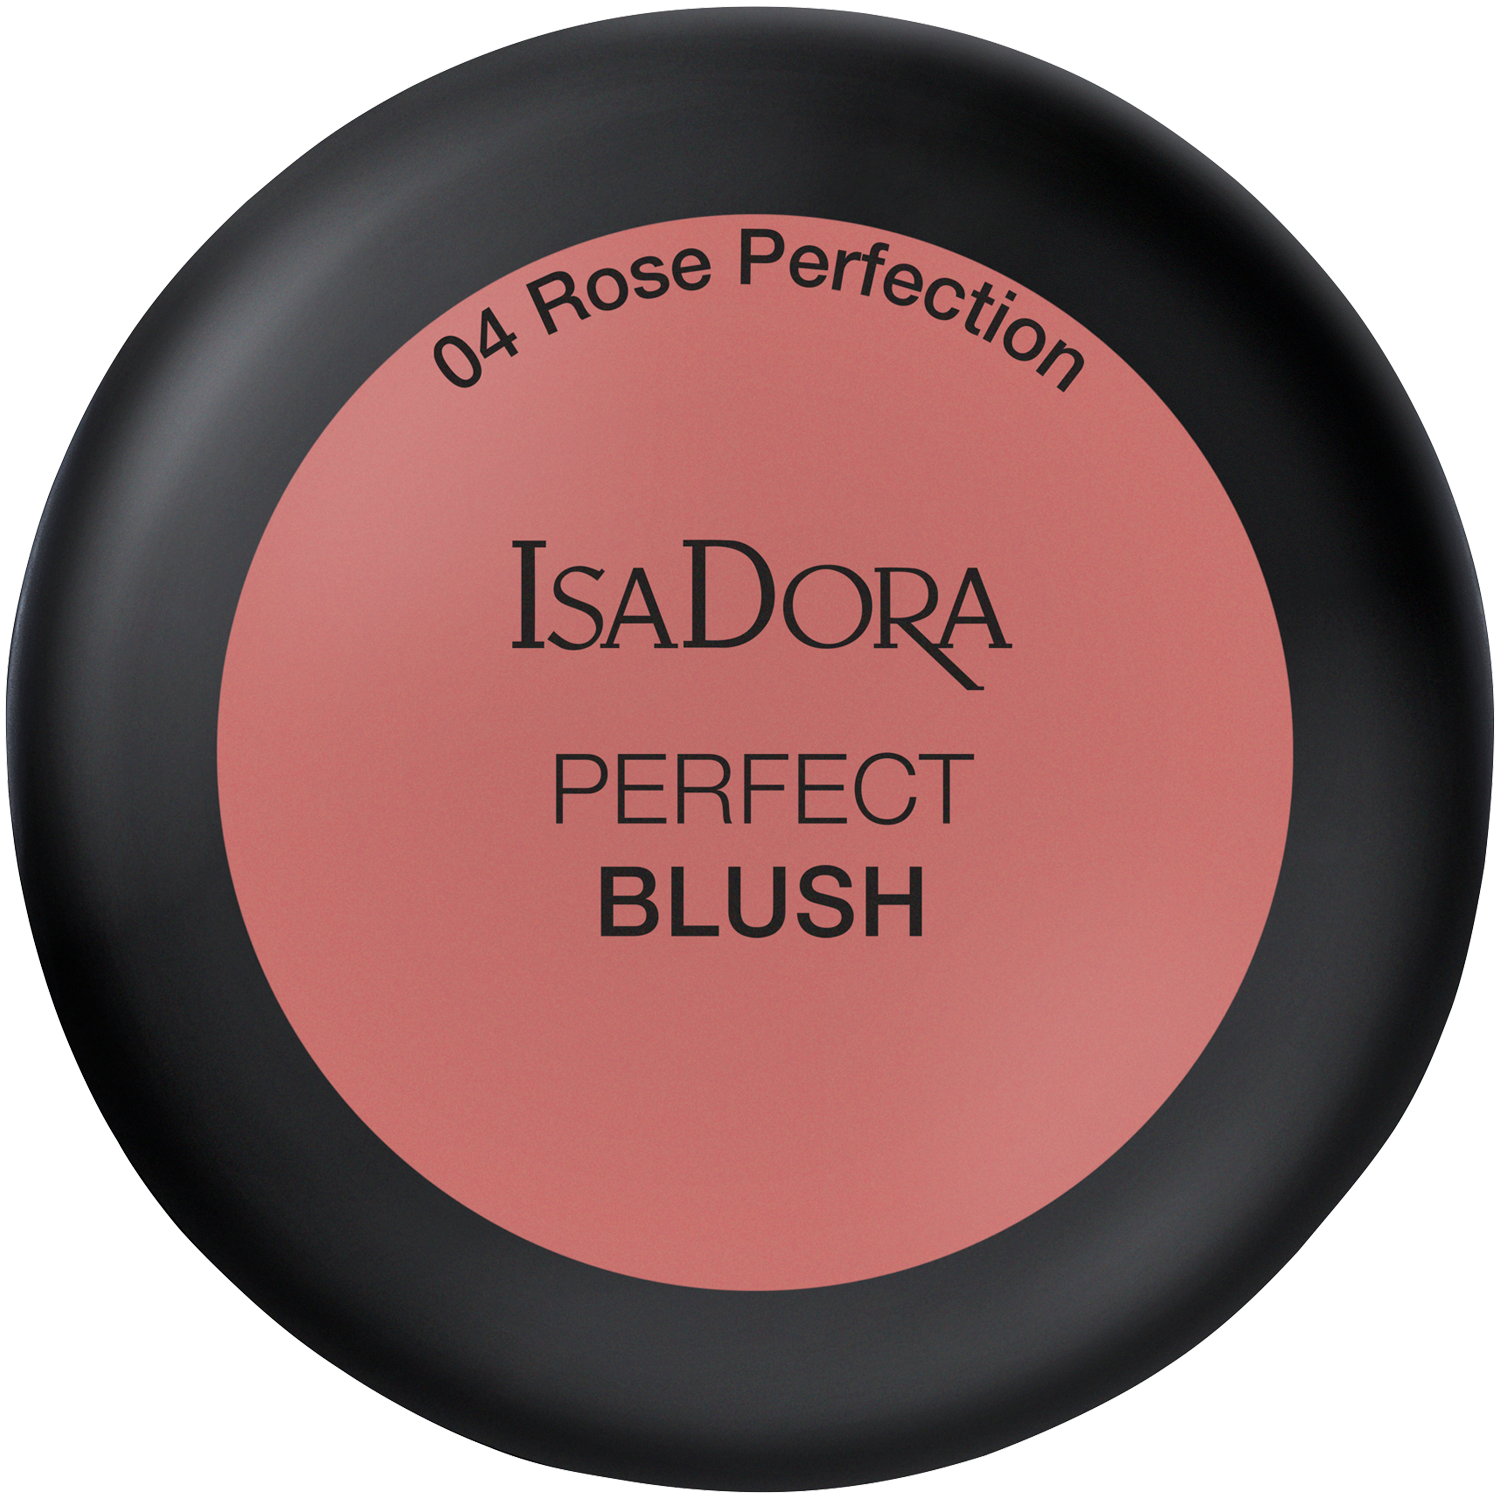 Румяна 04 rose perfection Isadora Perfect Blush, 4,5 гр